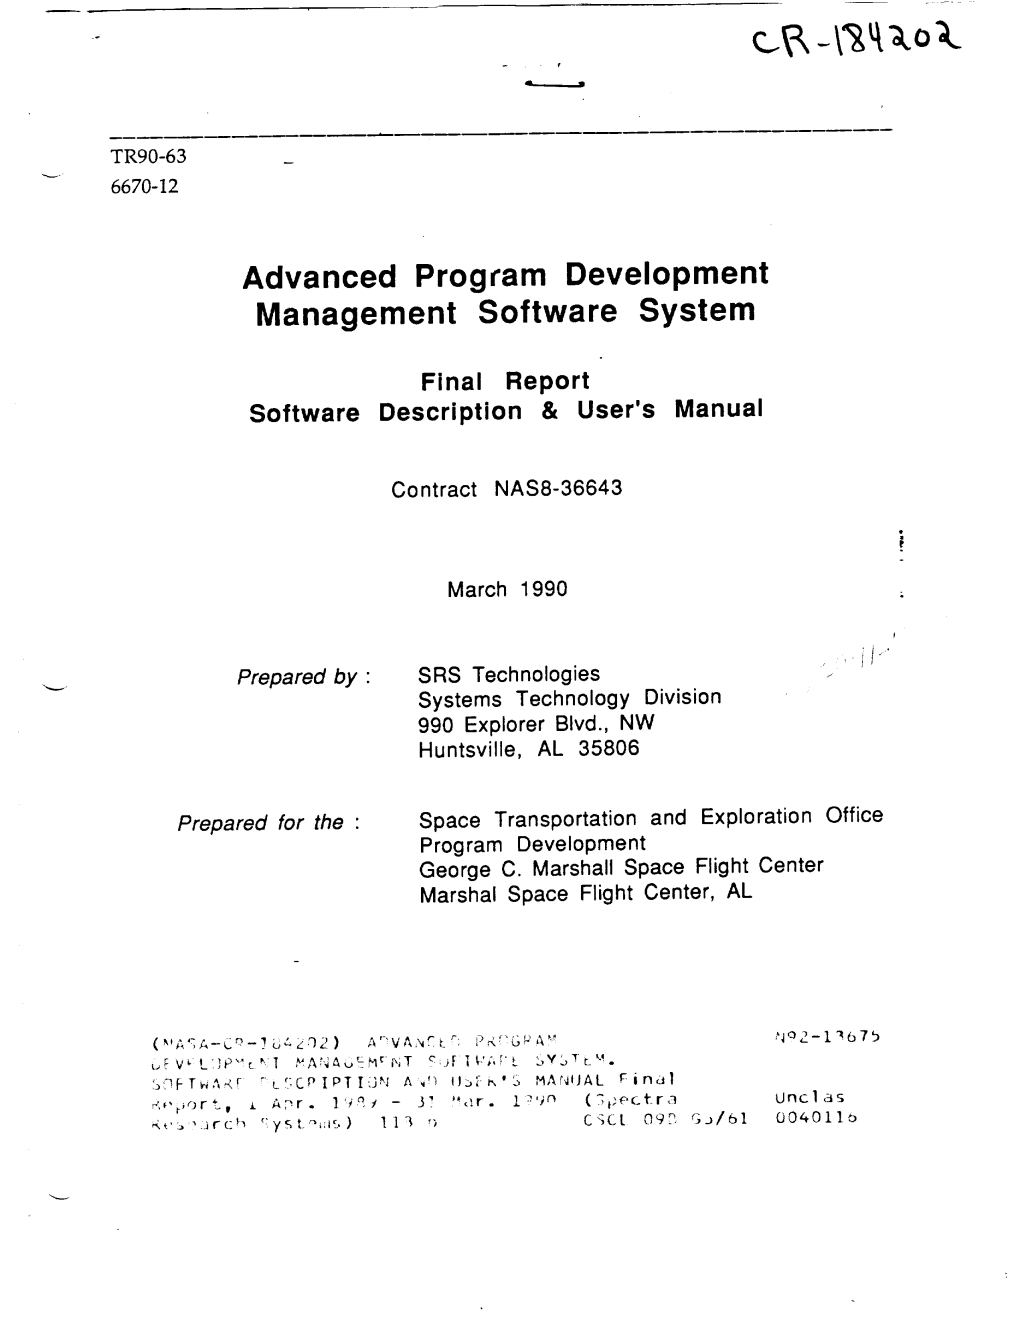 Advanced Program Development Management Software System